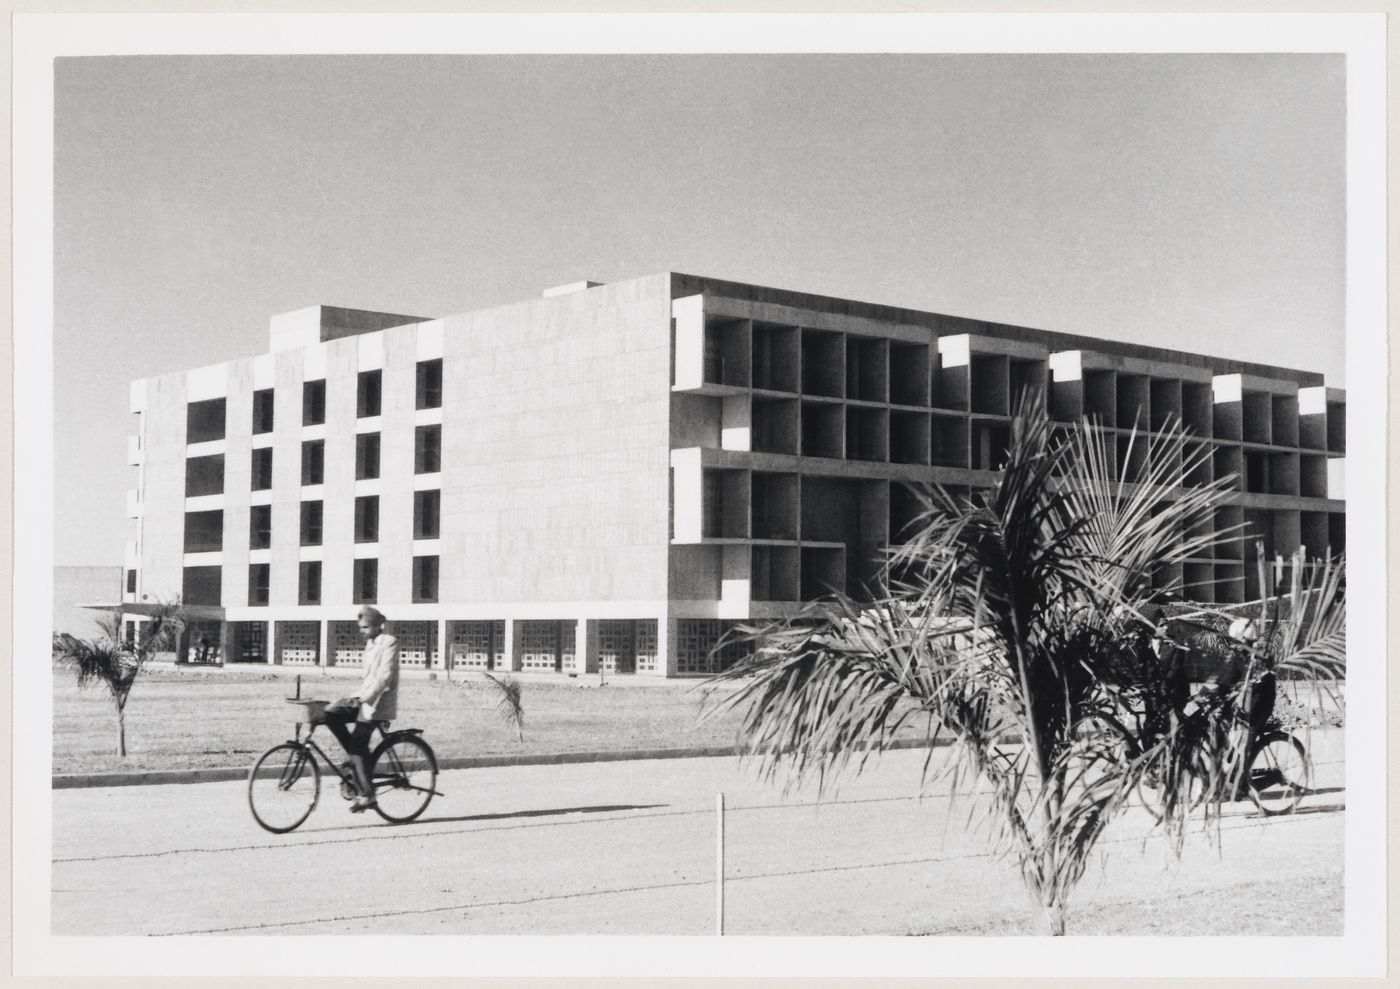 University Library façade with the main entrance, Punjab University, Chandigarh, India